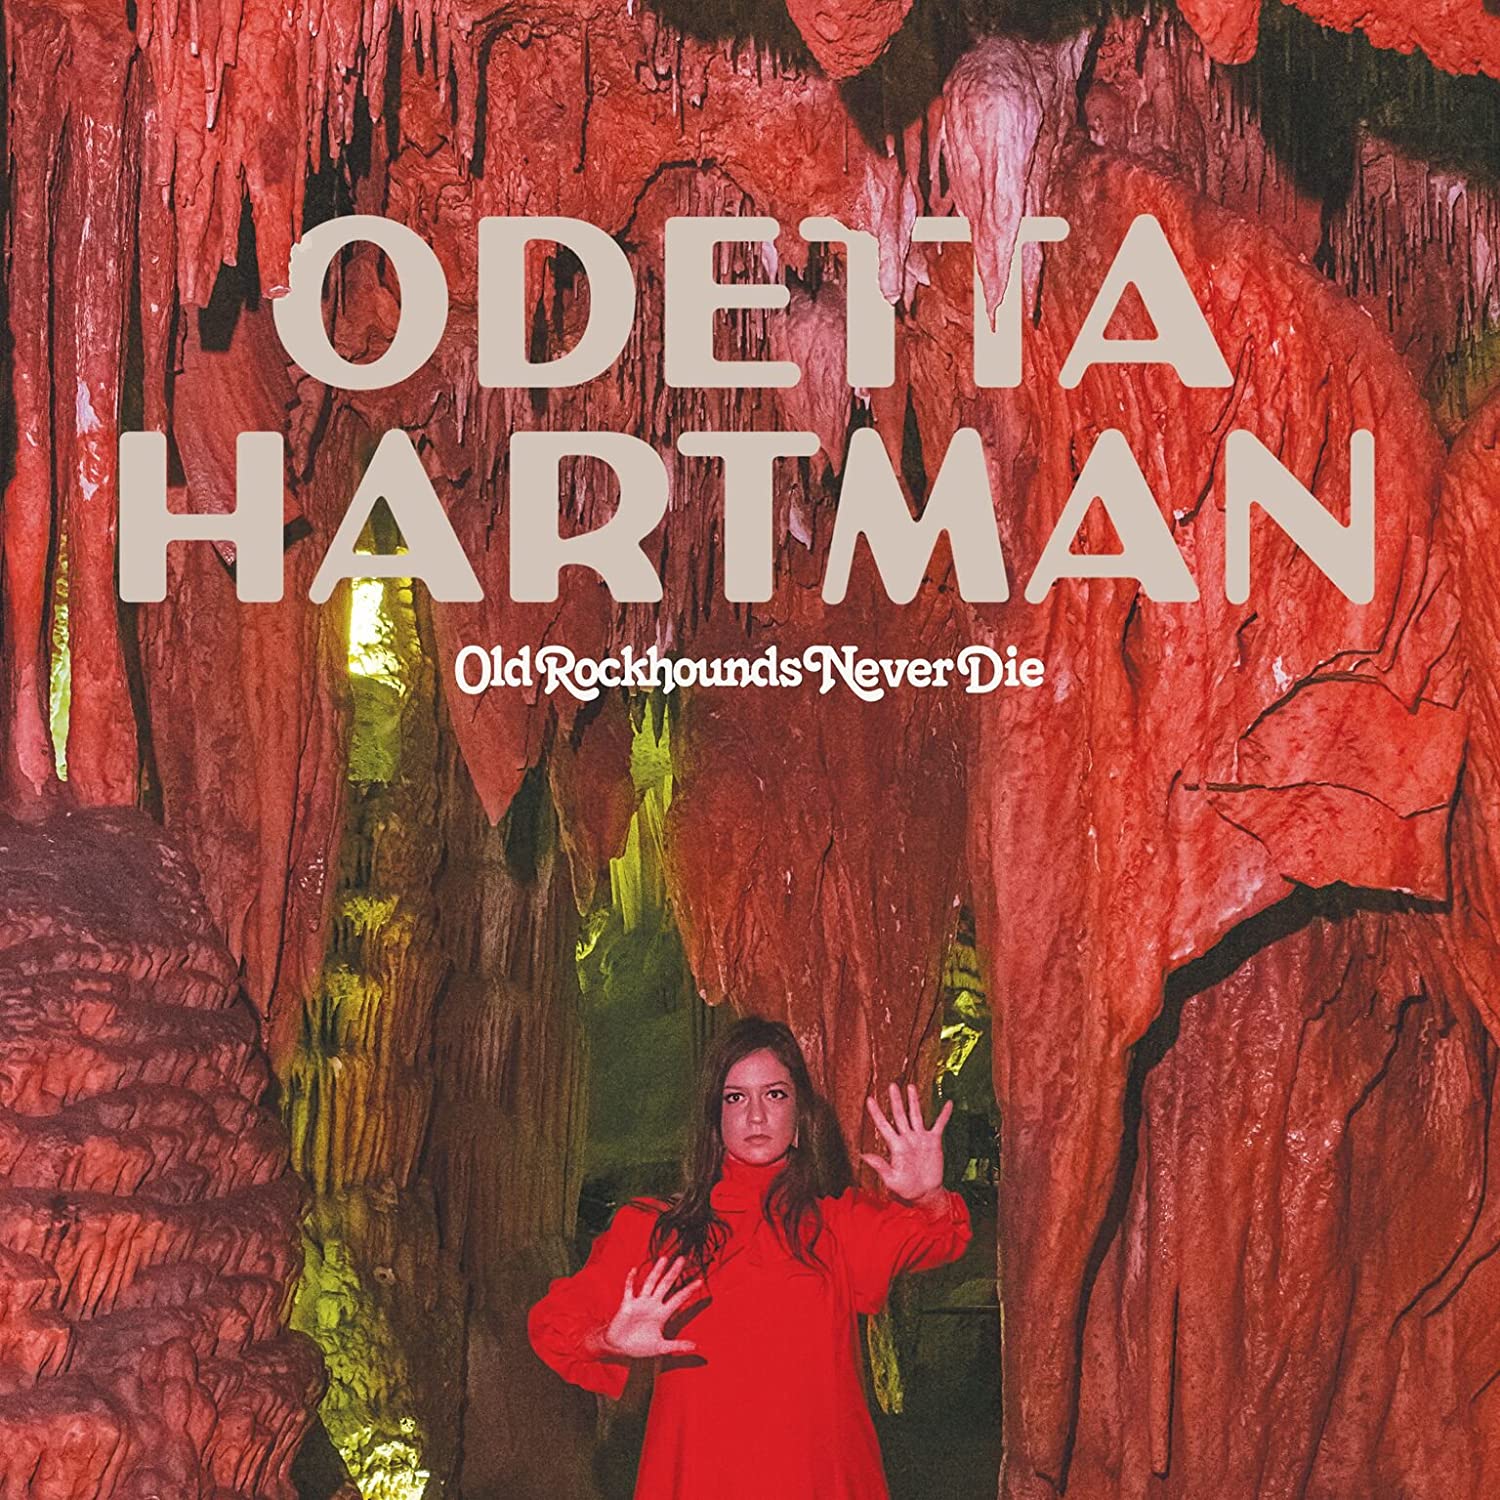 ODETTA HARTMAN - OLD ROCKHOUNDS NEVER DIE